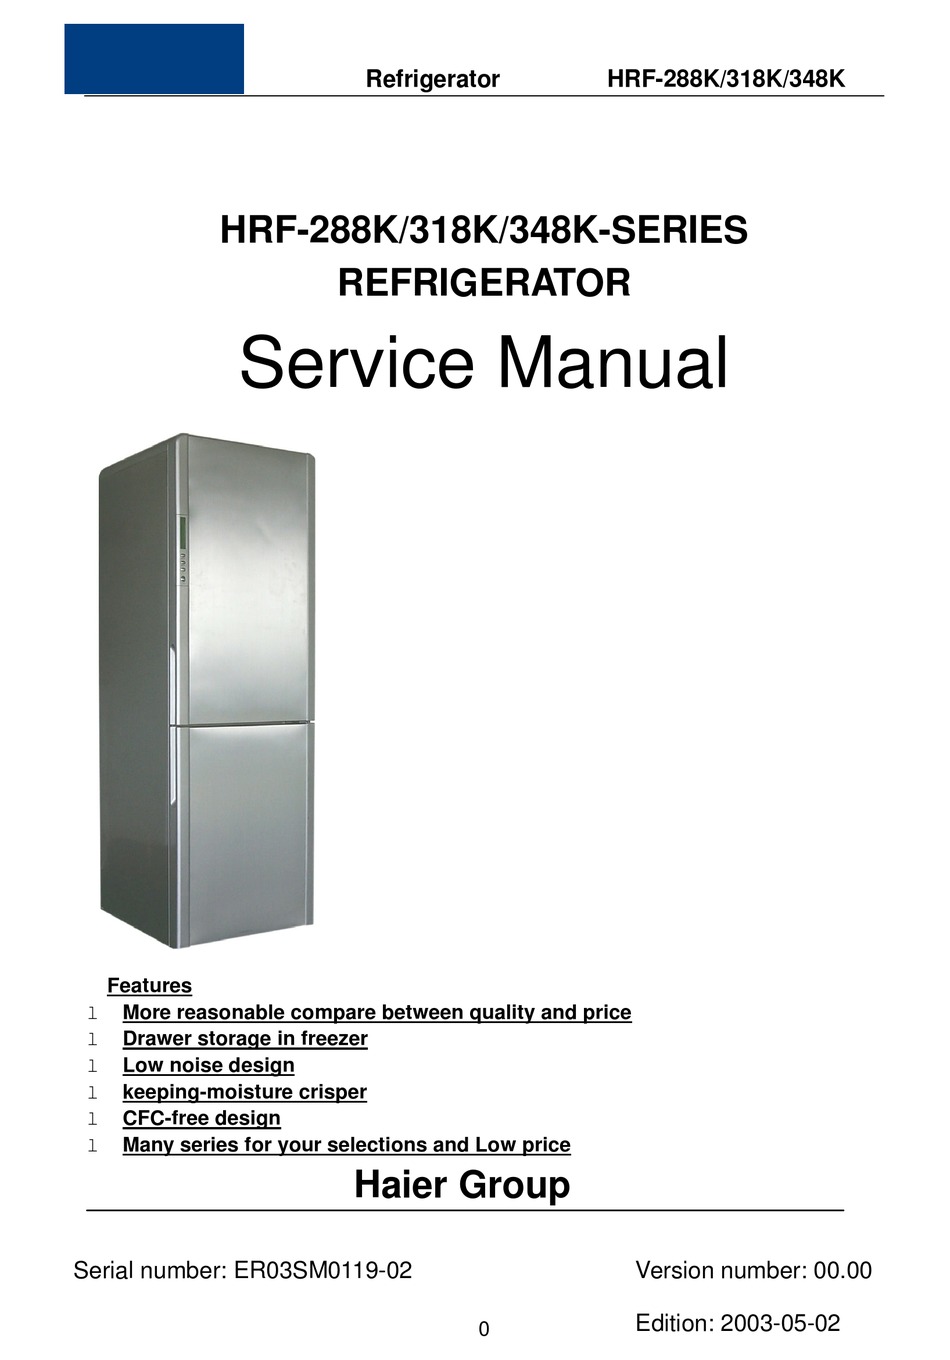 HAIER HRF-288K SERIES SERVICE MANUAL Pdf Download | ManualsLib